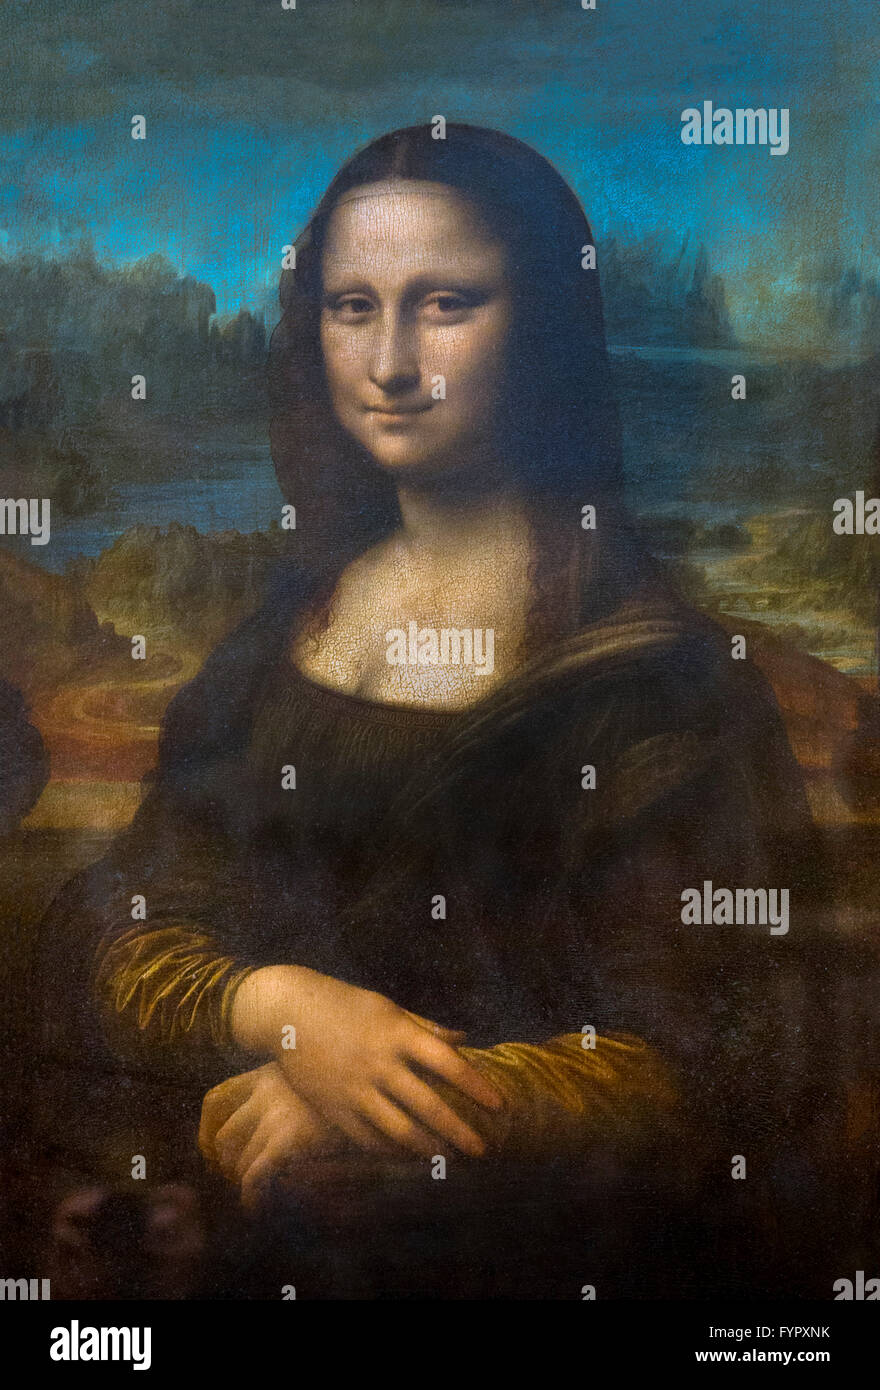 Mona Lisa, Portrait von Lisa Gherardini, Frau von Francesco del Giocondo, von Leonardo da Vinci, 1507, Musée du Louvre, Paris Frankreich Stockfoto